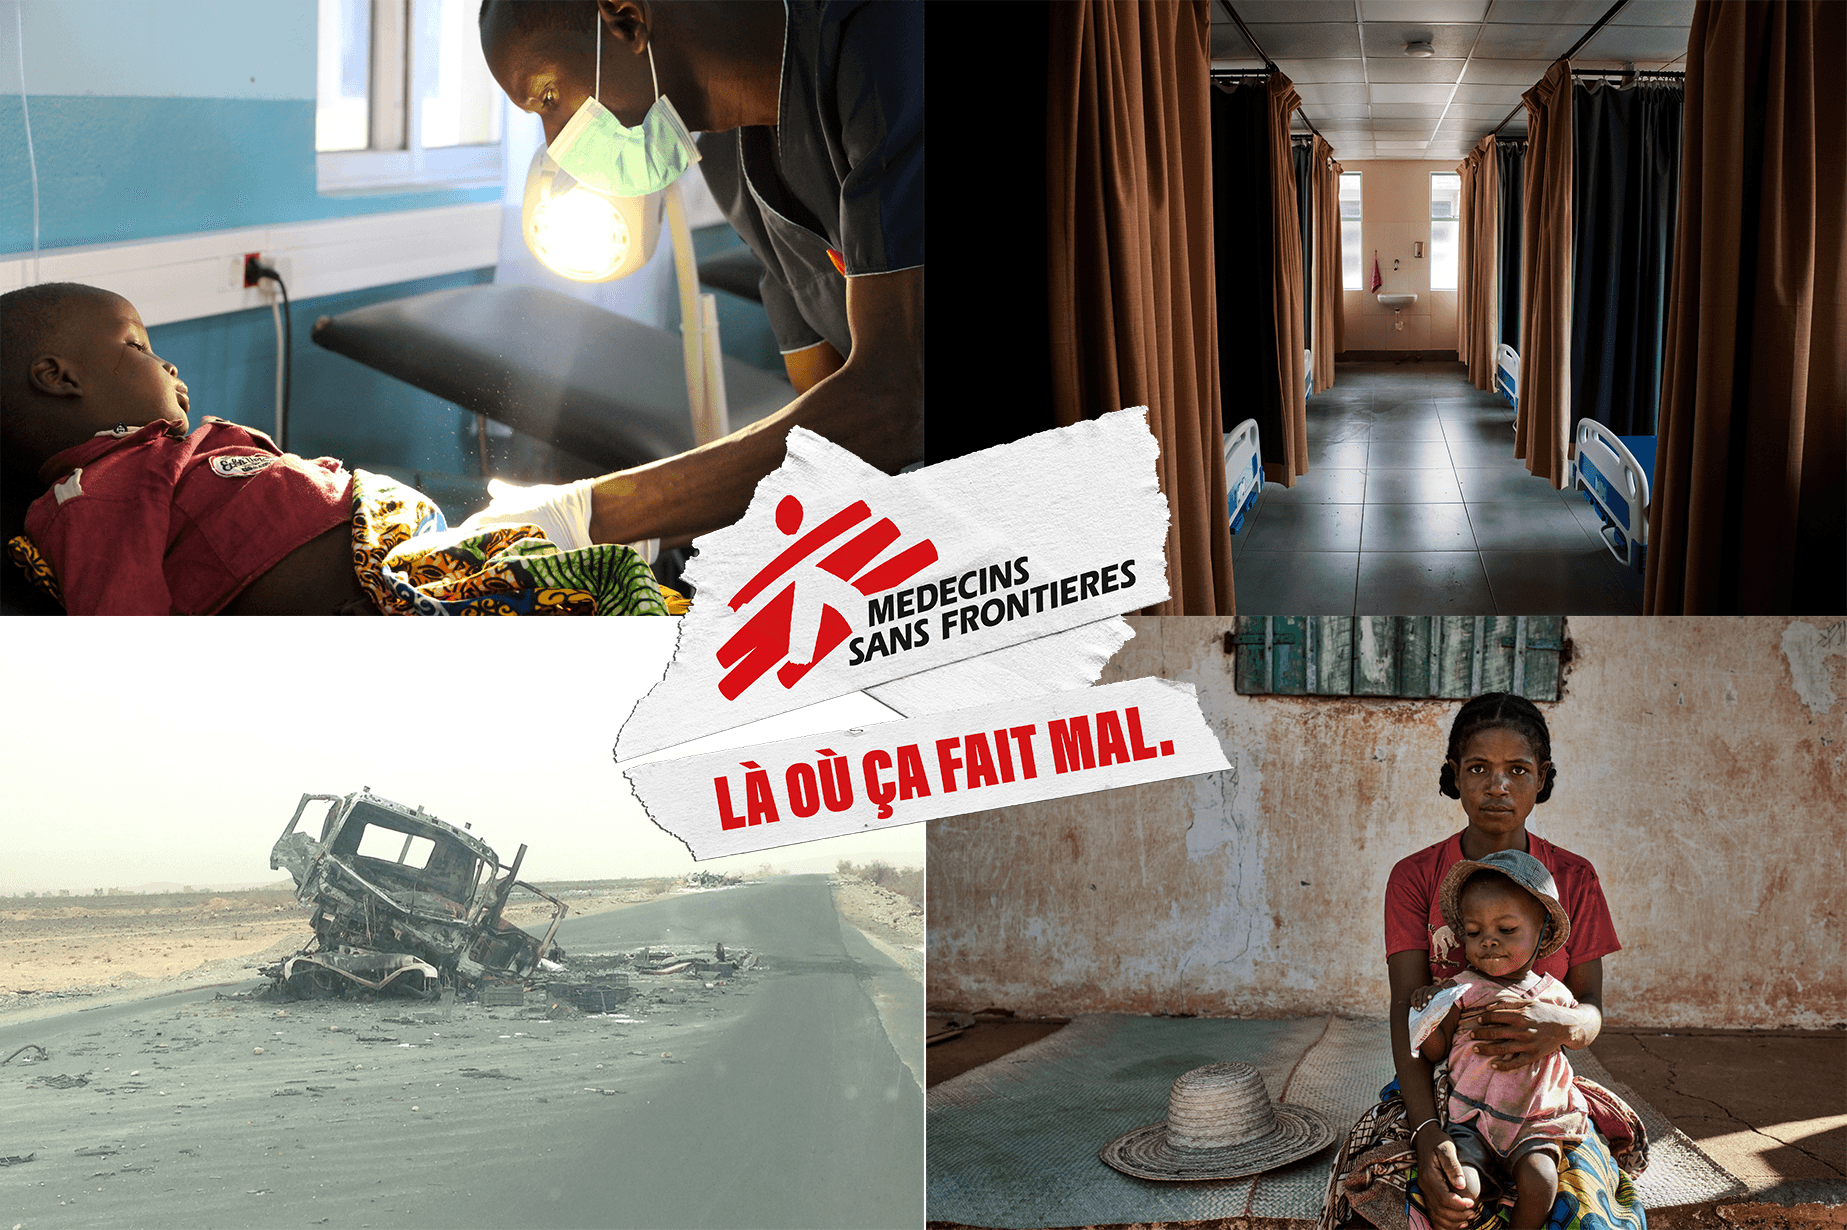 « LÀ où ça fait mal » :  MSF campaign bears witness to suffering around the world